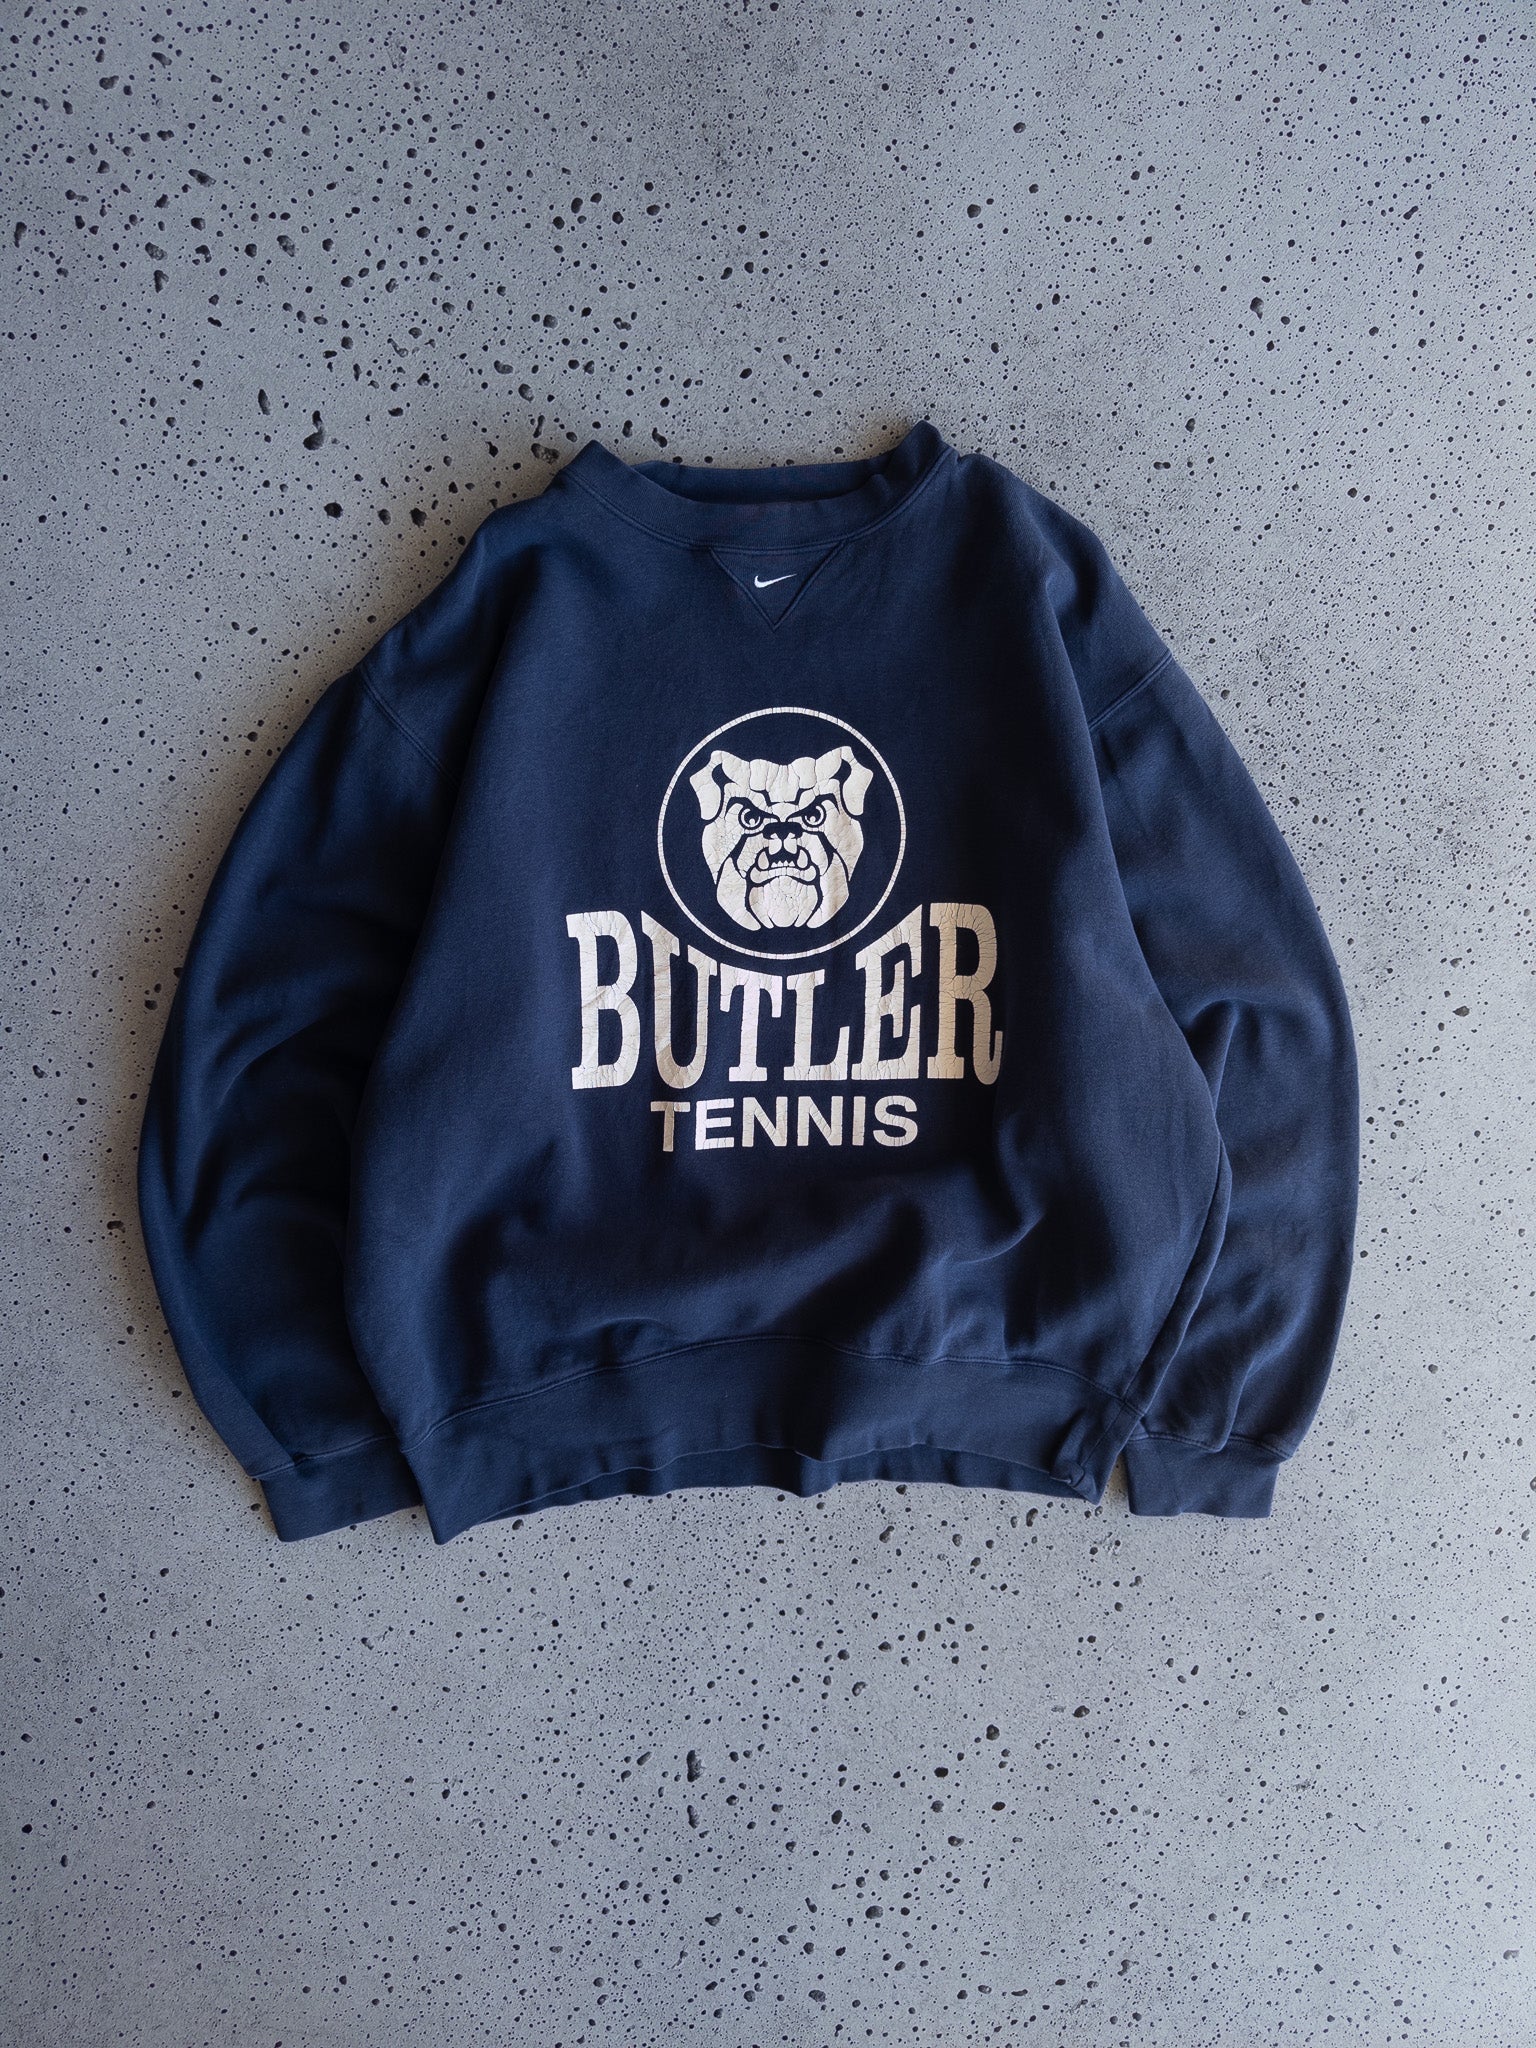 Vintage Butler Tennis Sweatshirt (L)